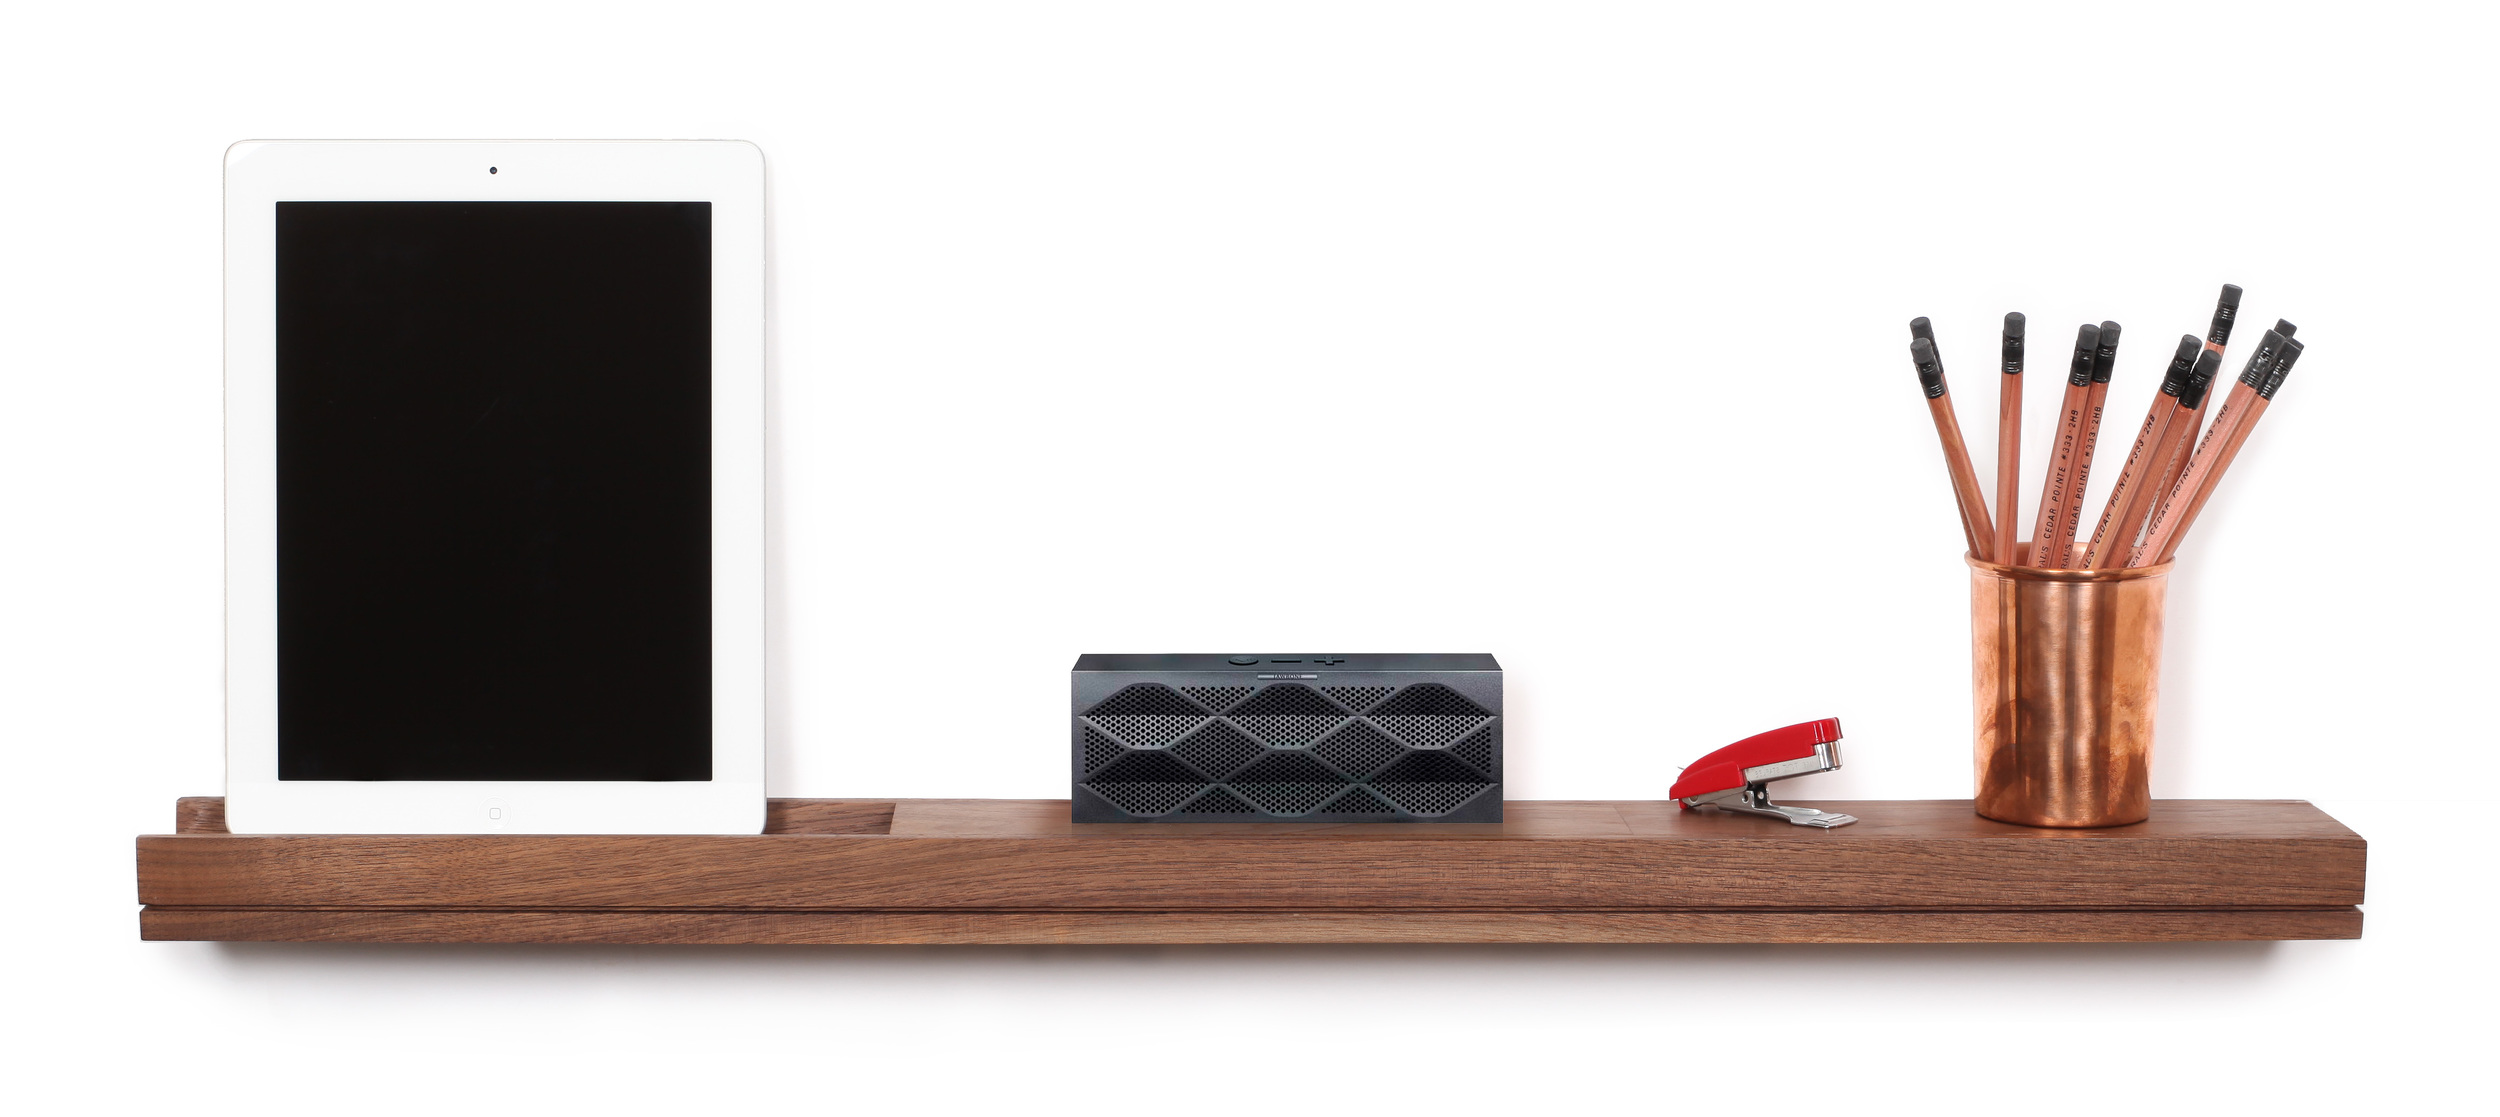 tech enabled office shelf - SINGULAR wall console